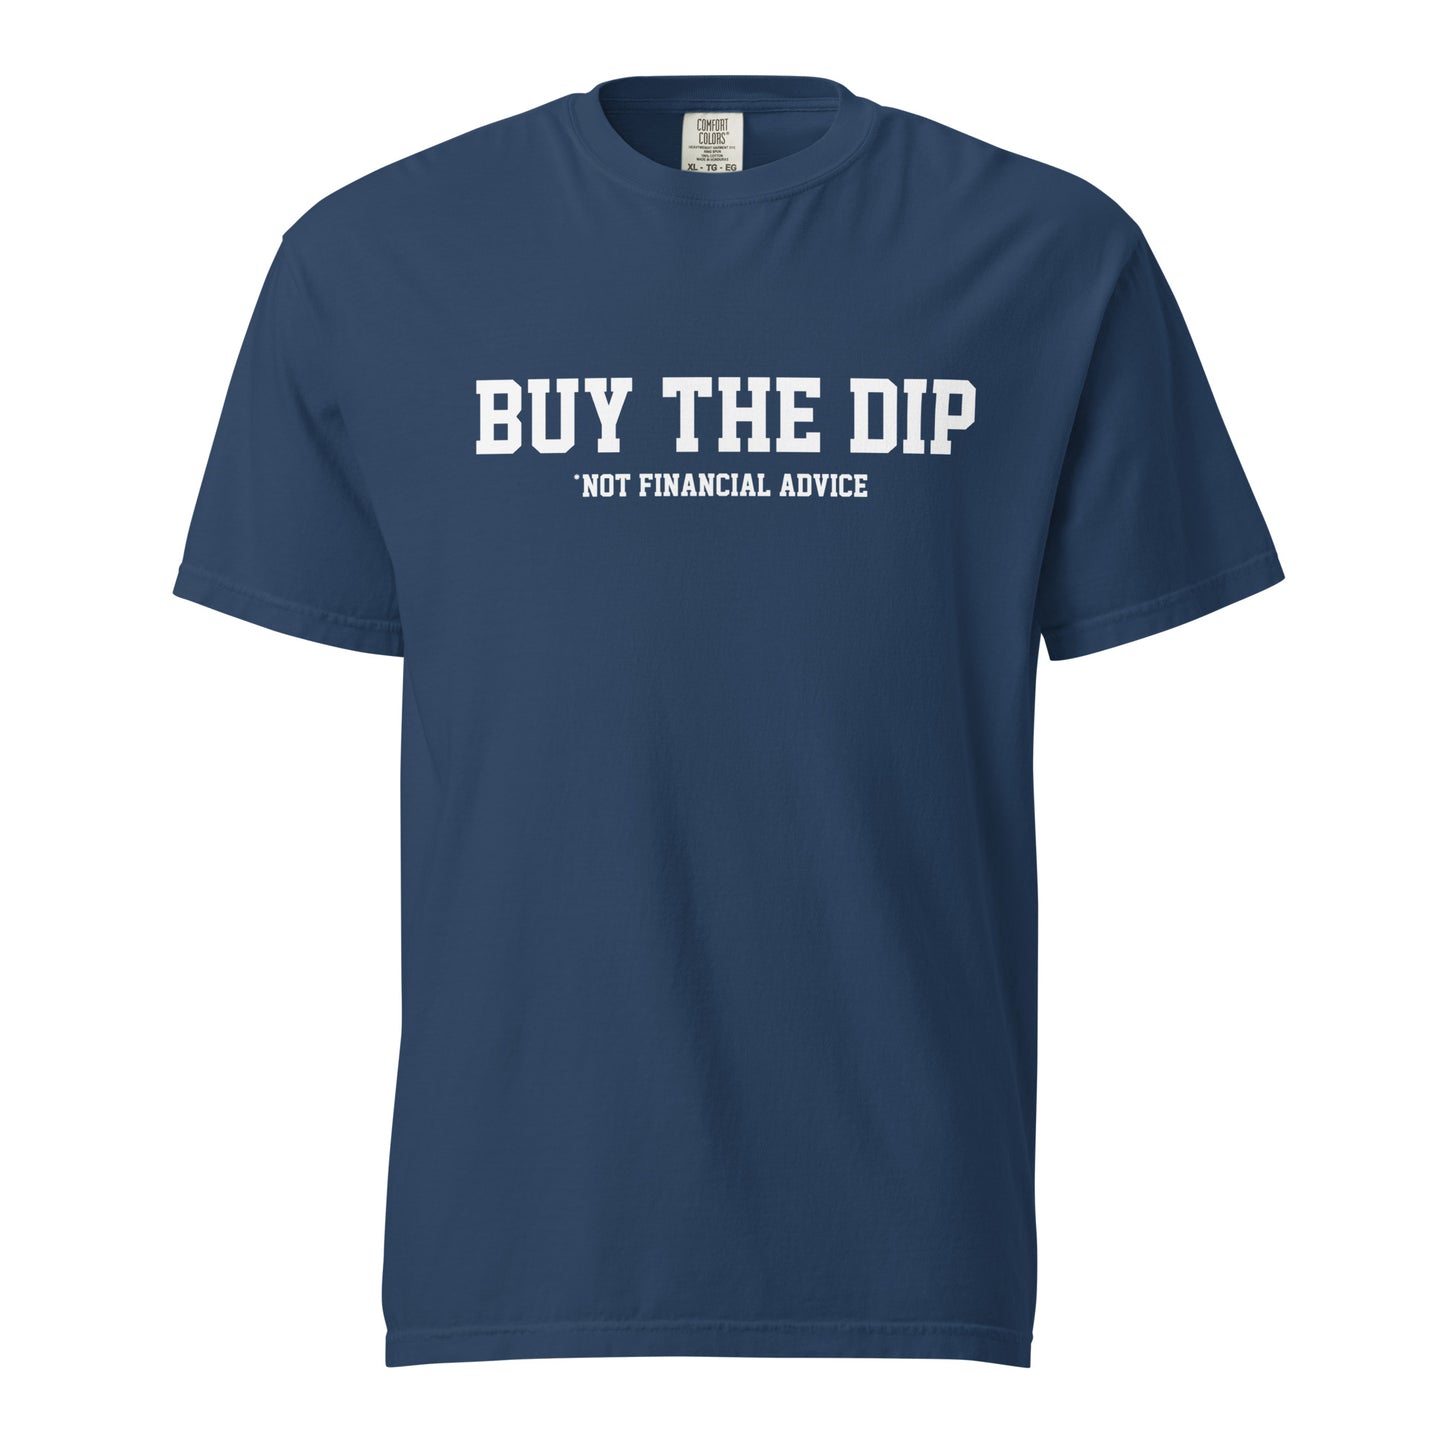 BUY THE DIP! heavyweight t-shirt